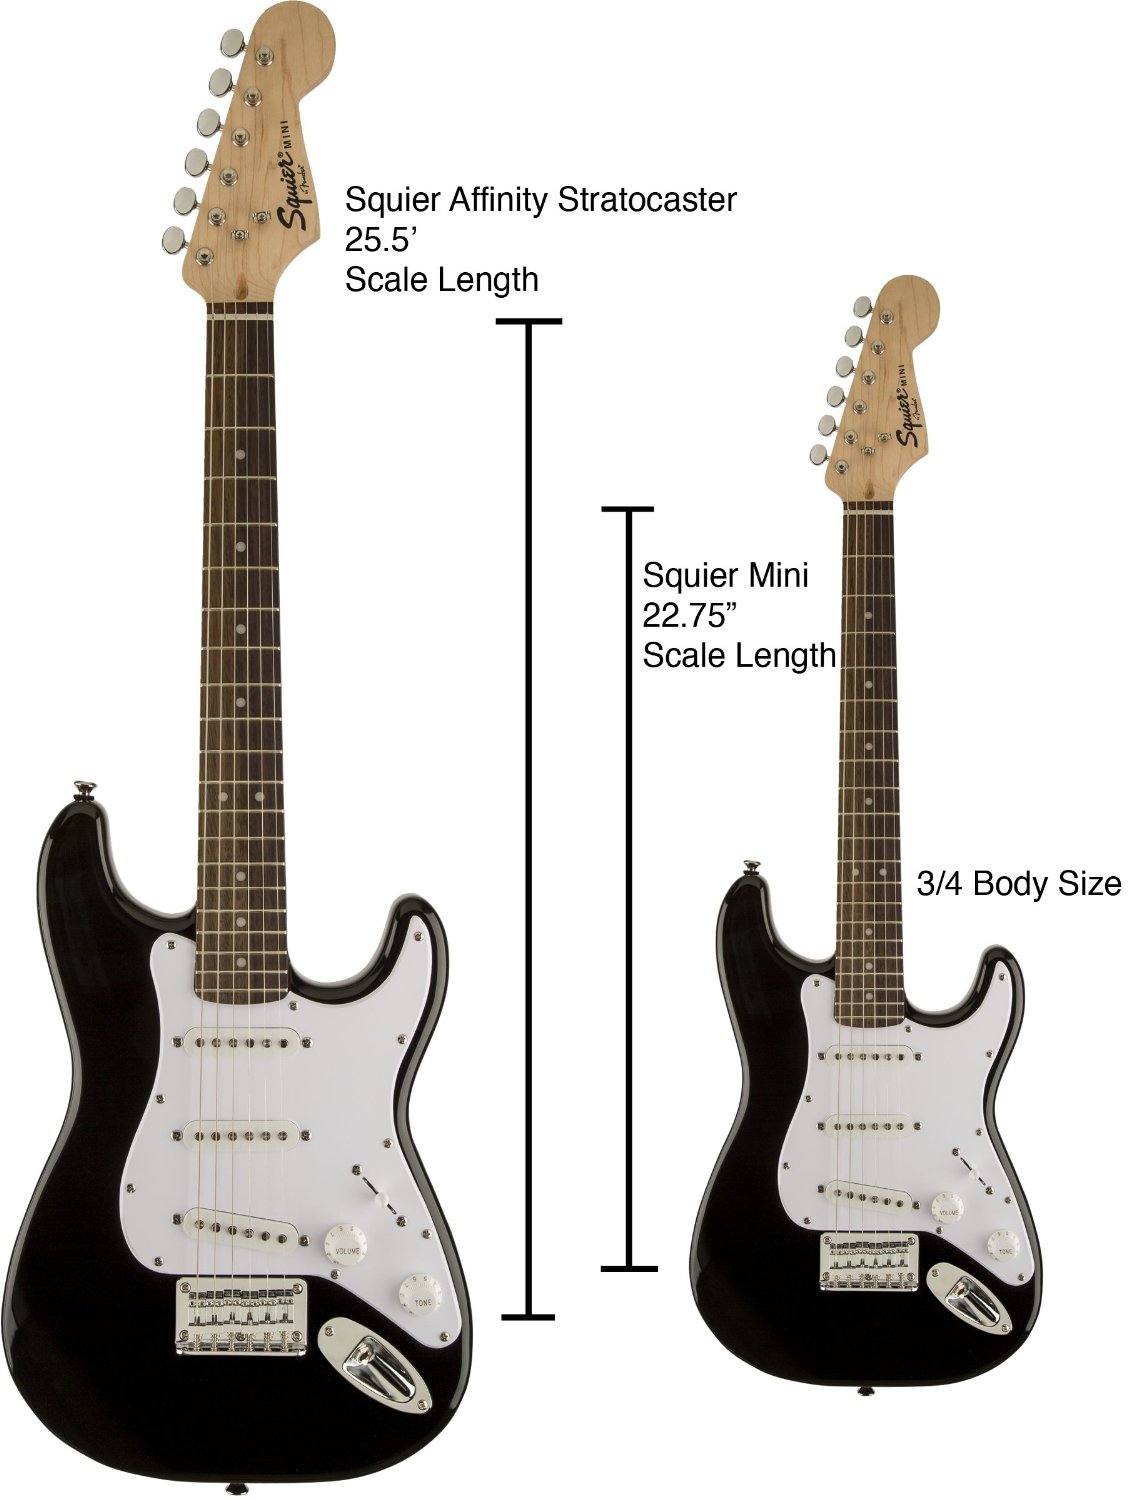 Размеры электрогитары. Размер гитары Fender Squier Stratocaster. Фендер скваер стратокастер мини. Fender Stratocaster габариты. Гитара Squier Stratocaster габариты.